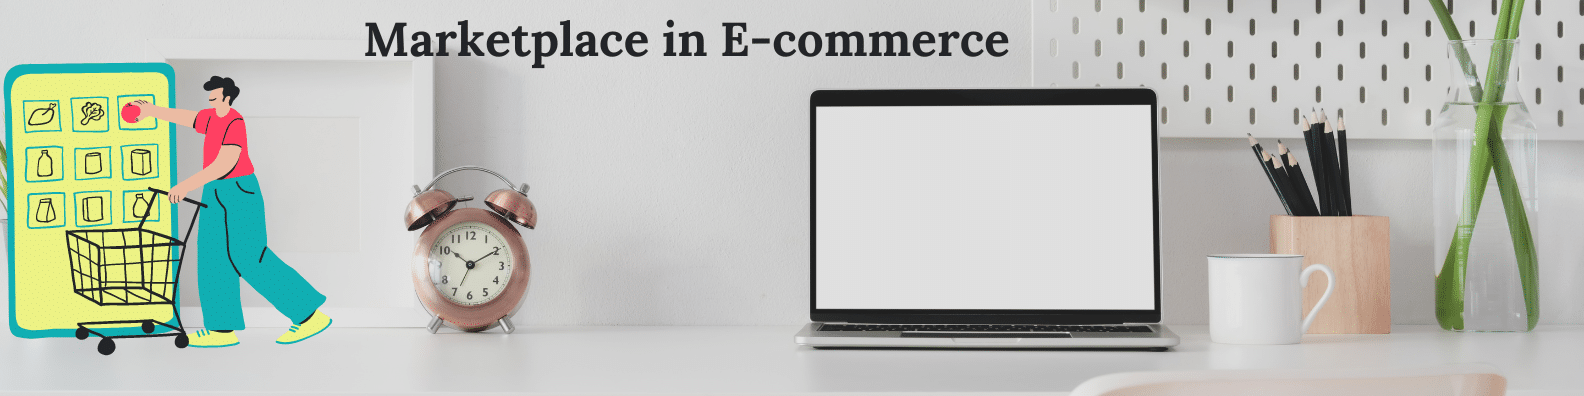 Marketplace in E-commerce